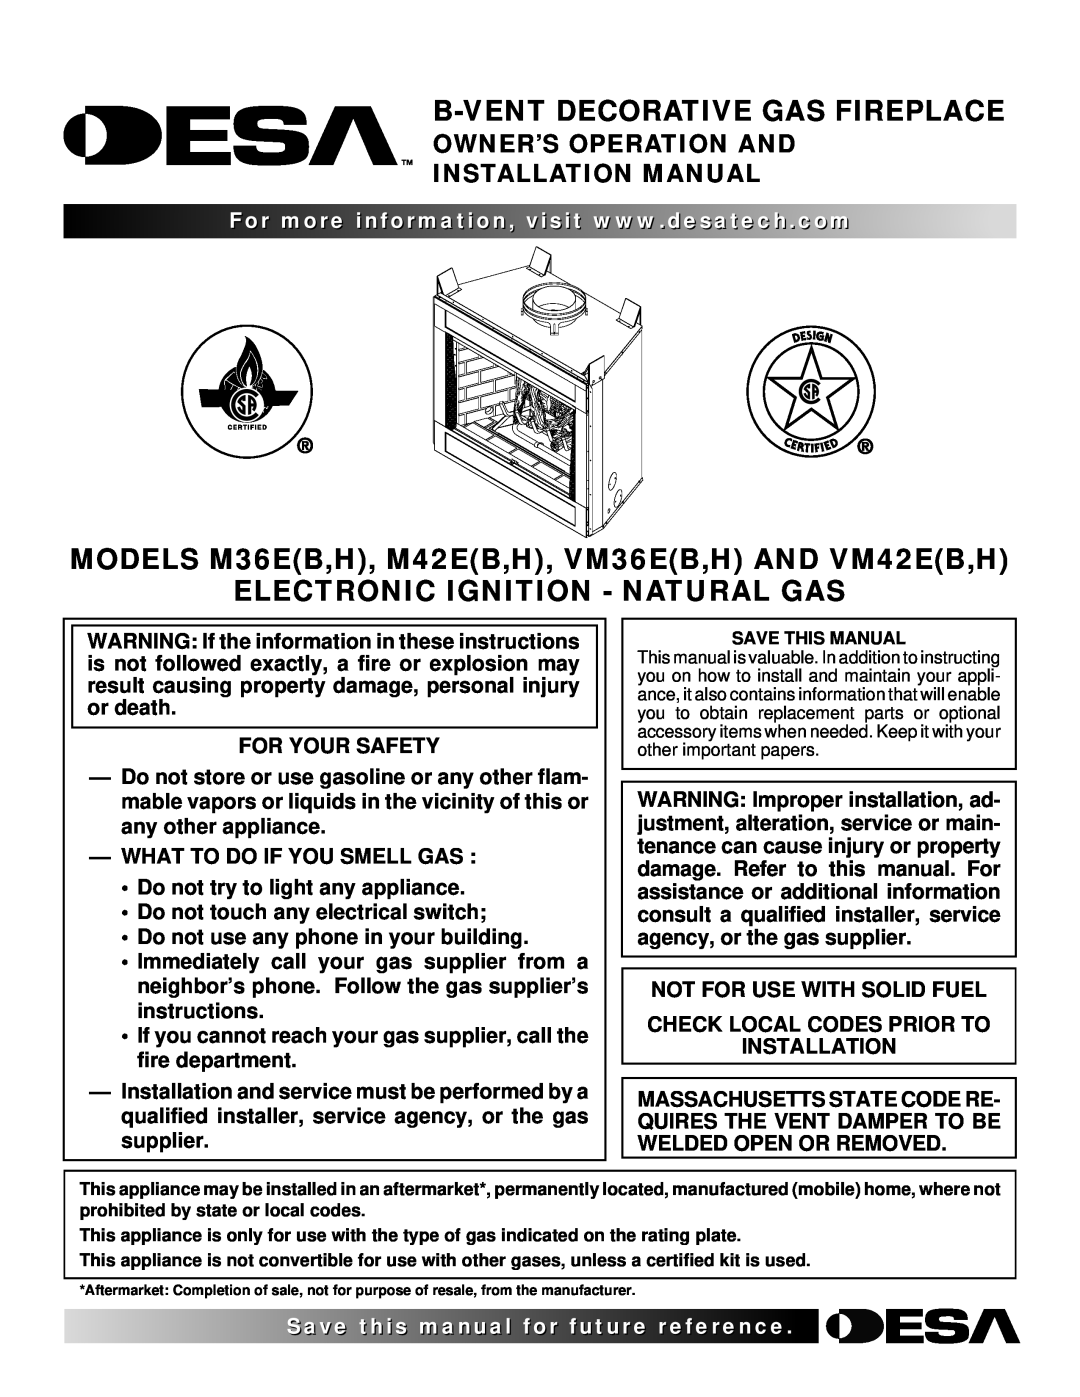 Desa M42E(B, VM36E(B installation manual B-Vent Decorative Gas Fireplace, MODELS M36EB,H, M42EB,H, VM36EB,H AND VM42EB,H 